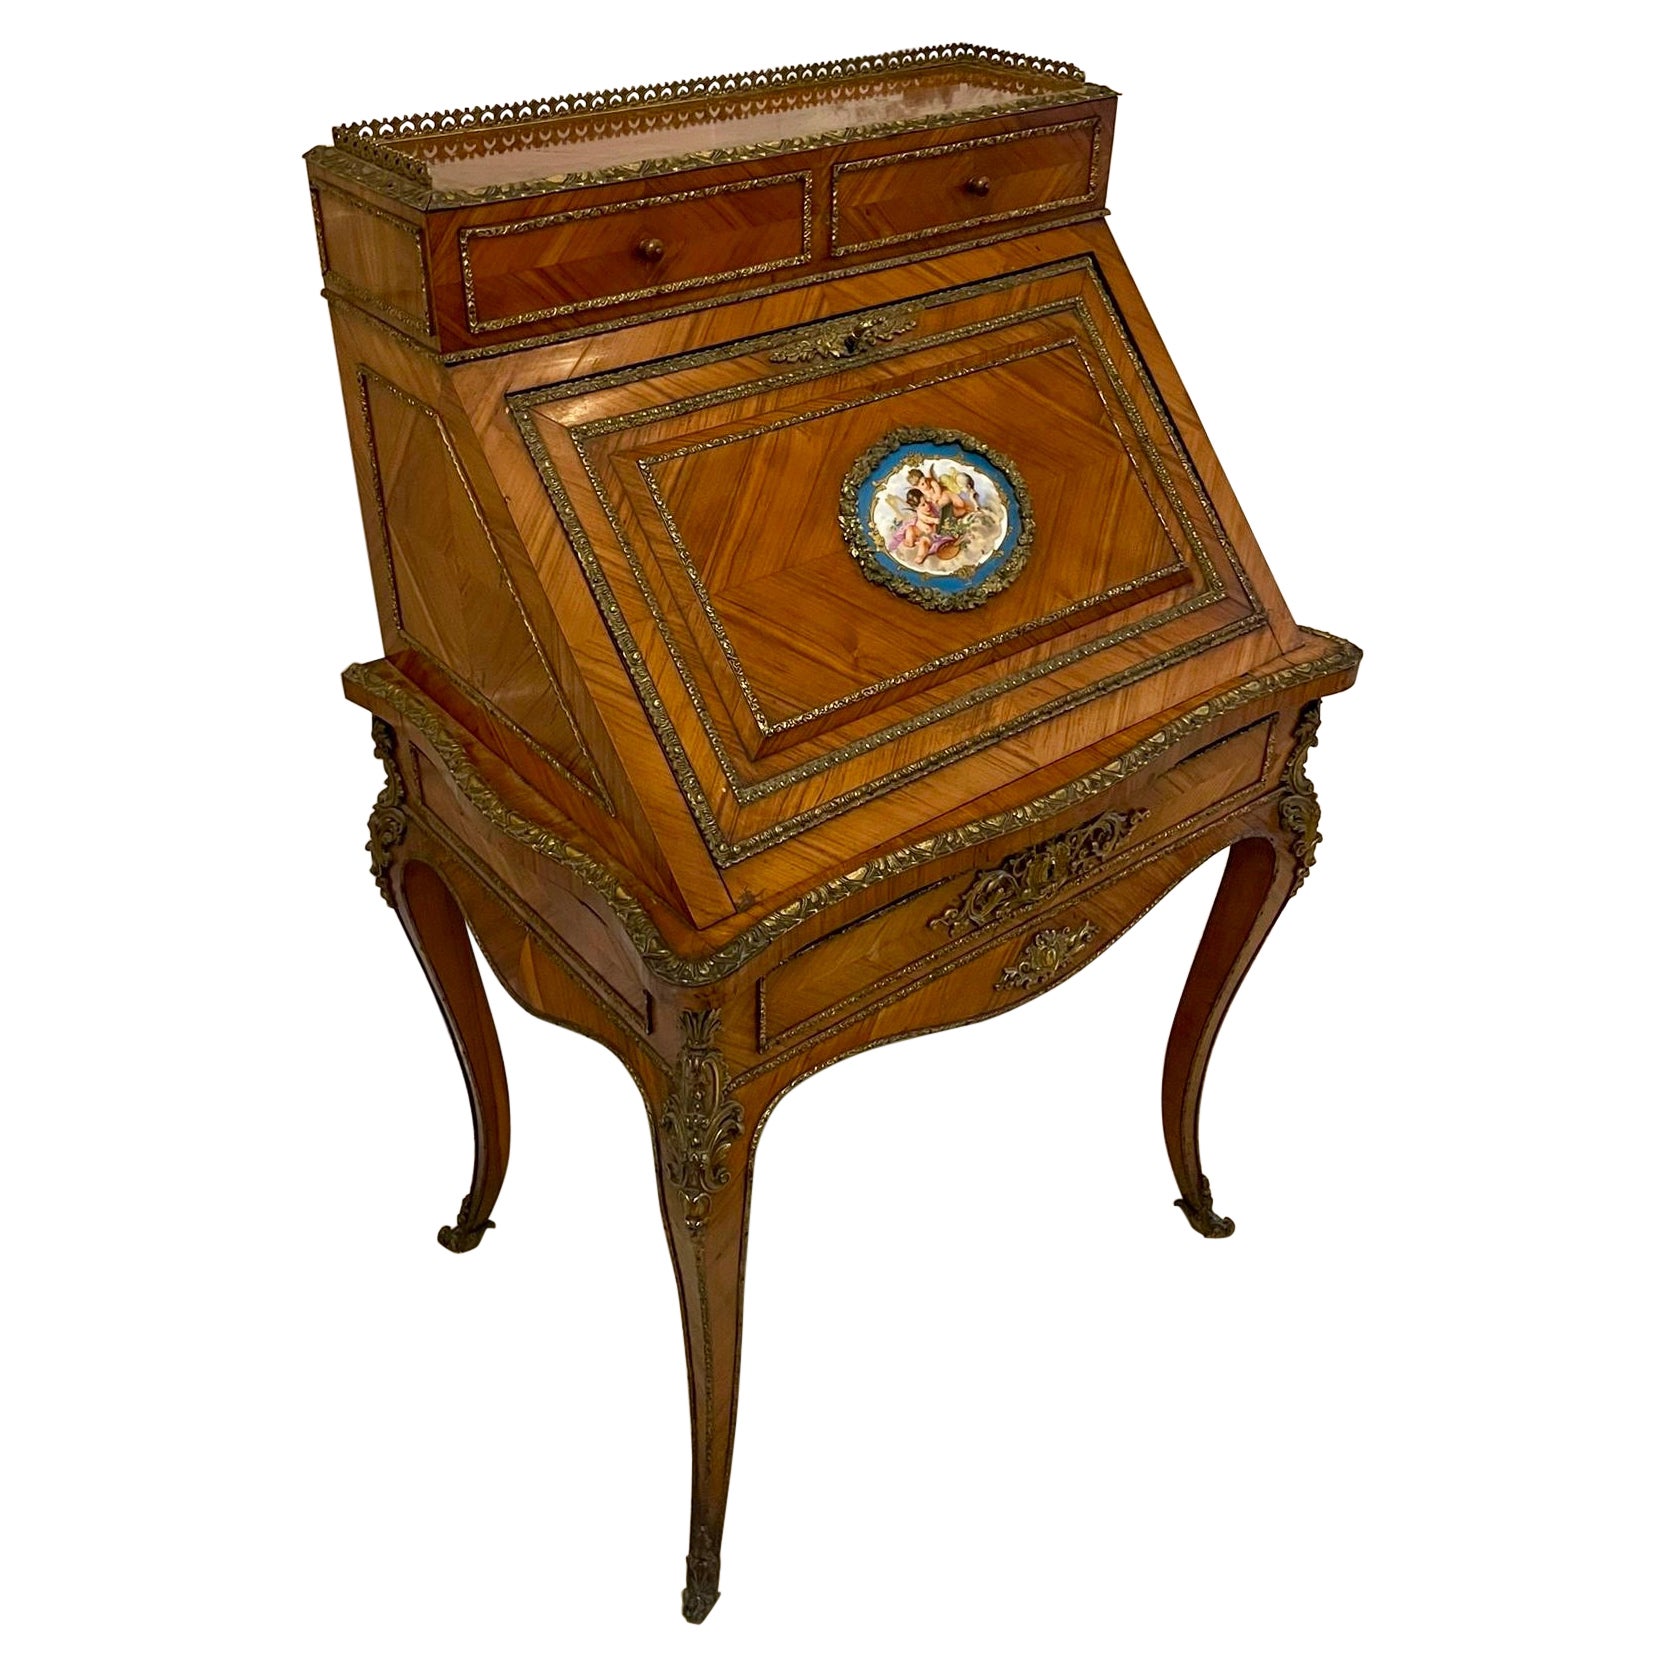 Fine Quality French Antique Victorian Kingwood and Ormolu Mounted Bureau/Desk